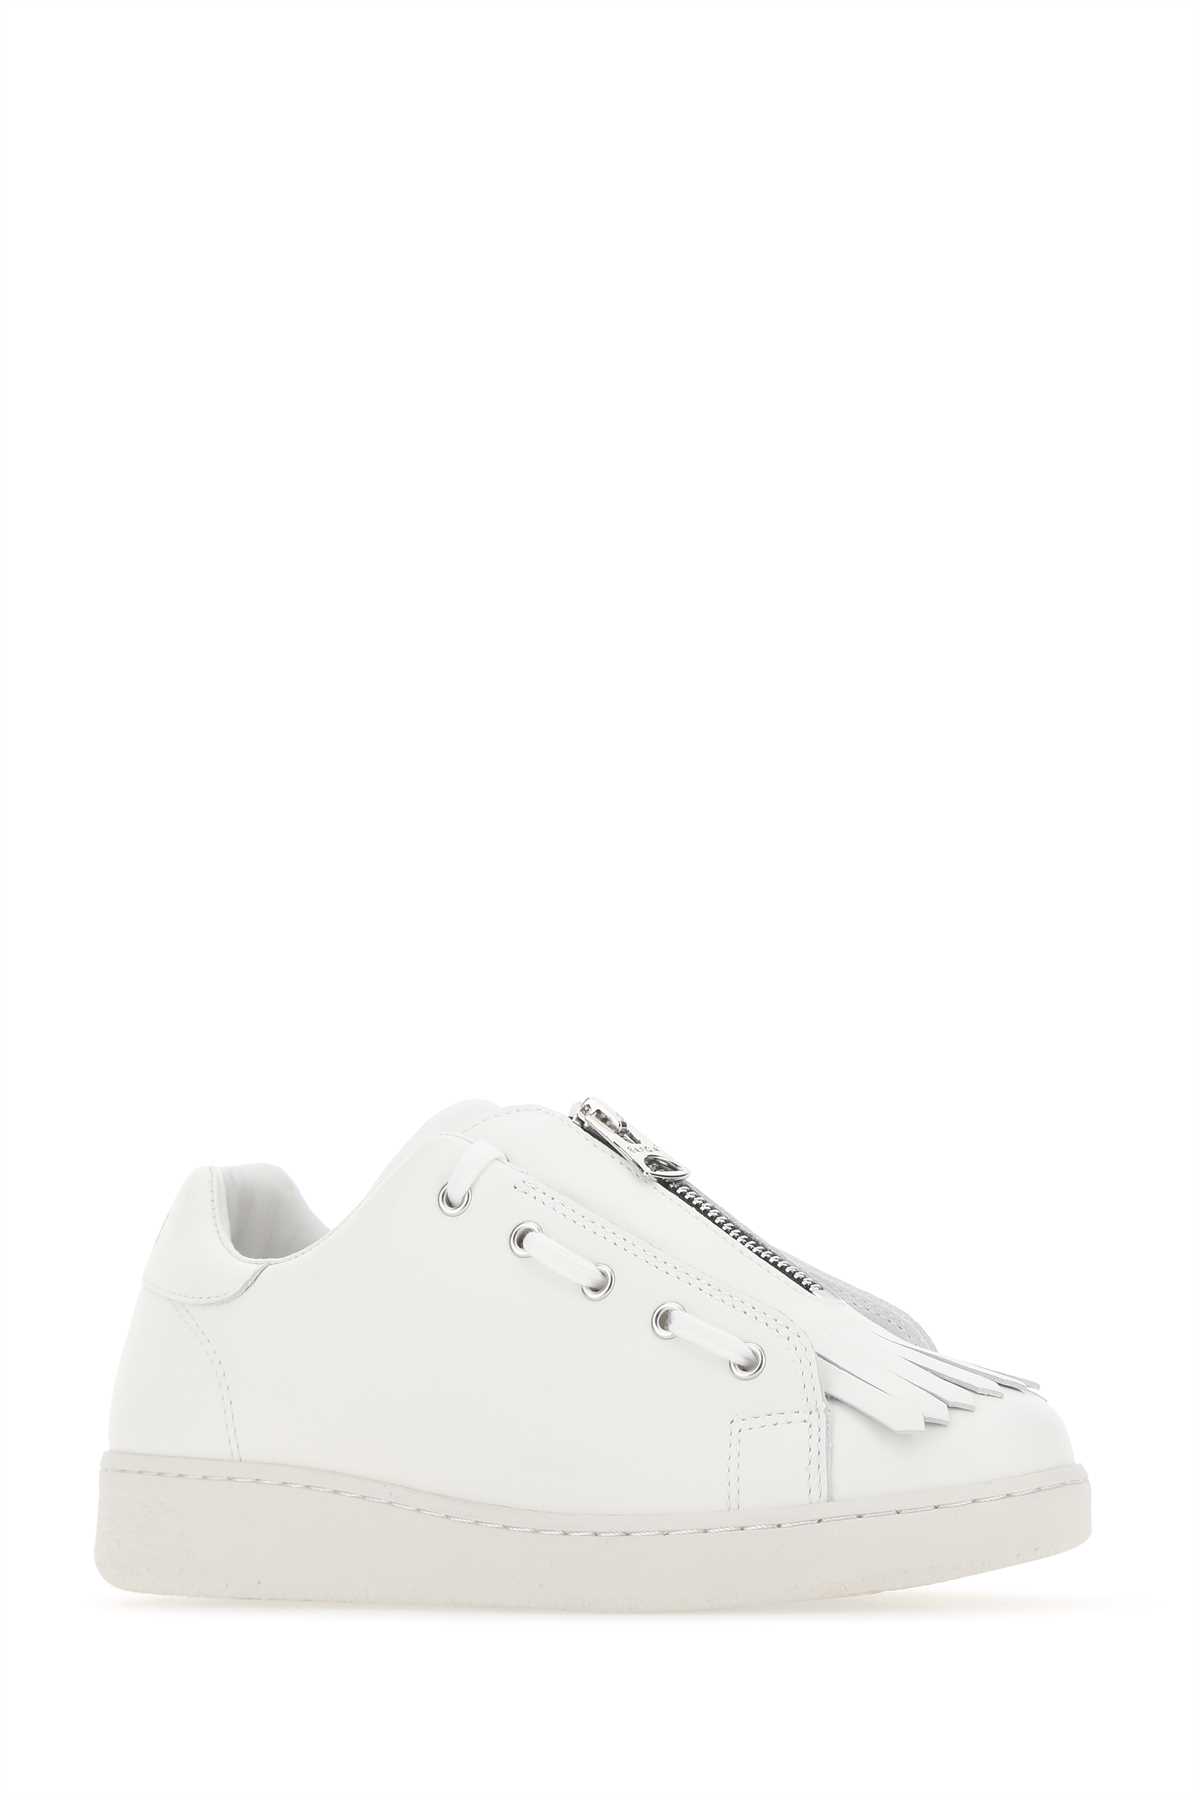 Shop Apc White Leather Julietta Sneakers